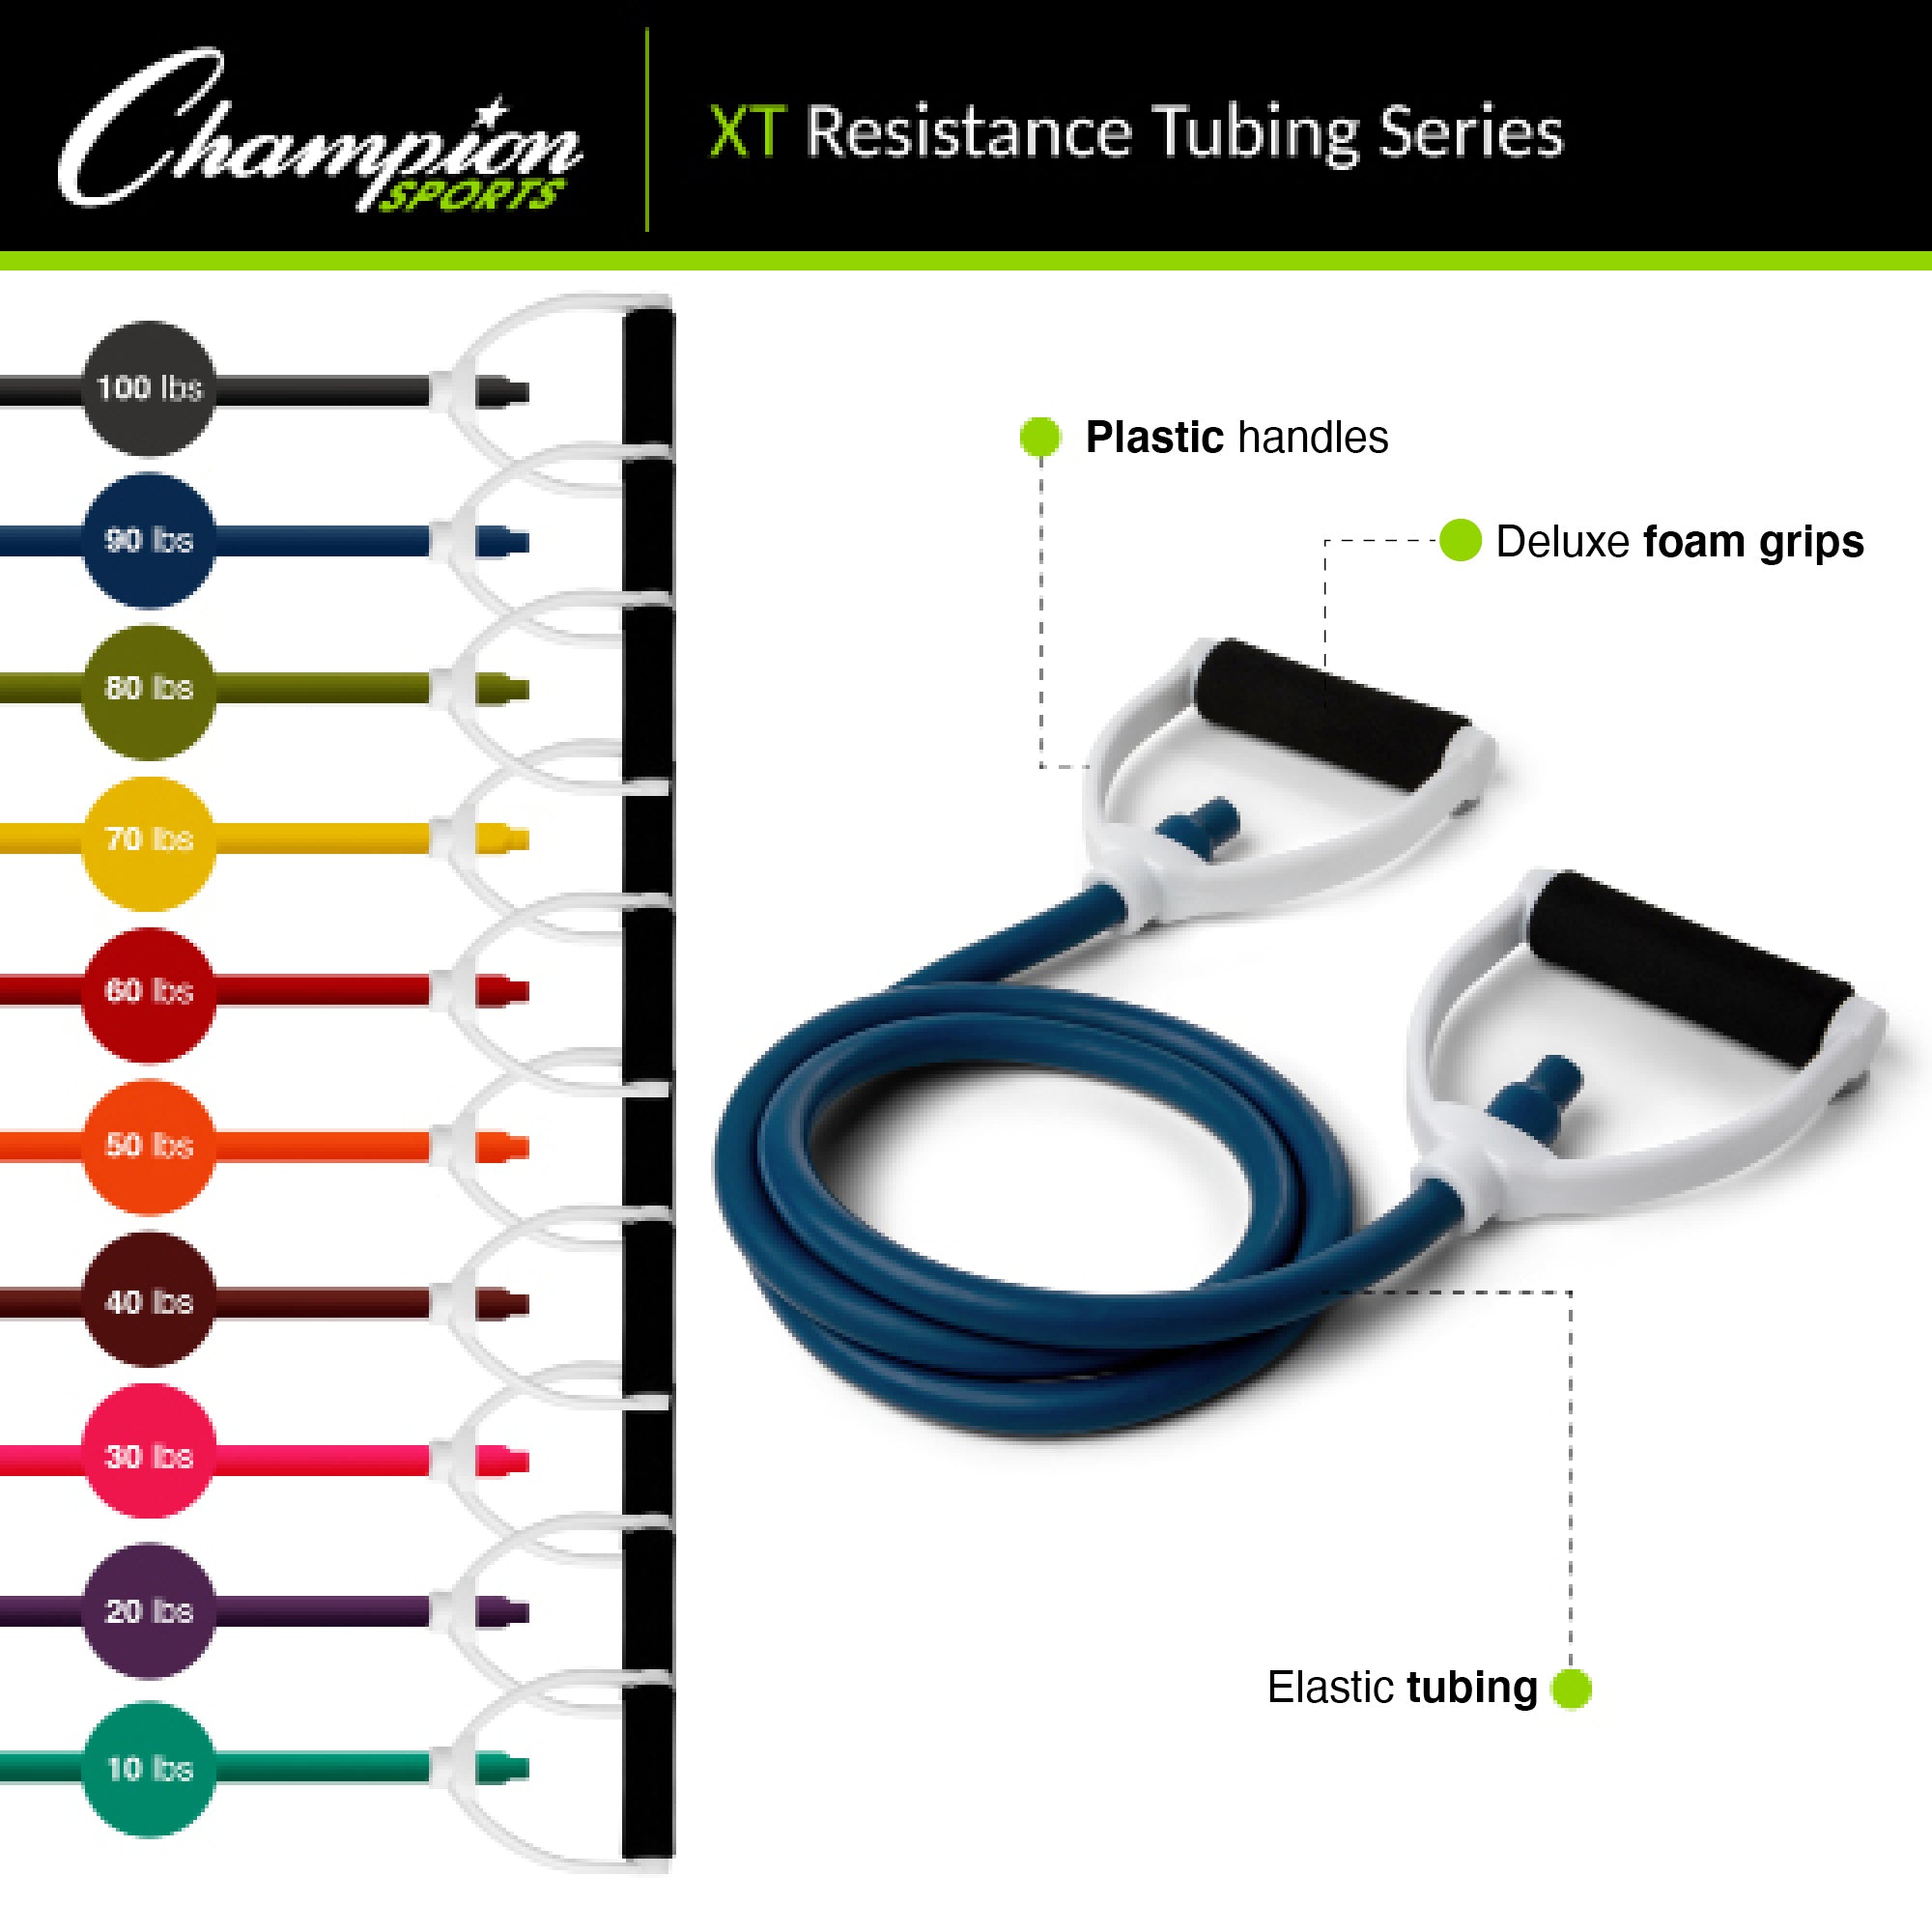 XT Resistance Tubing Series